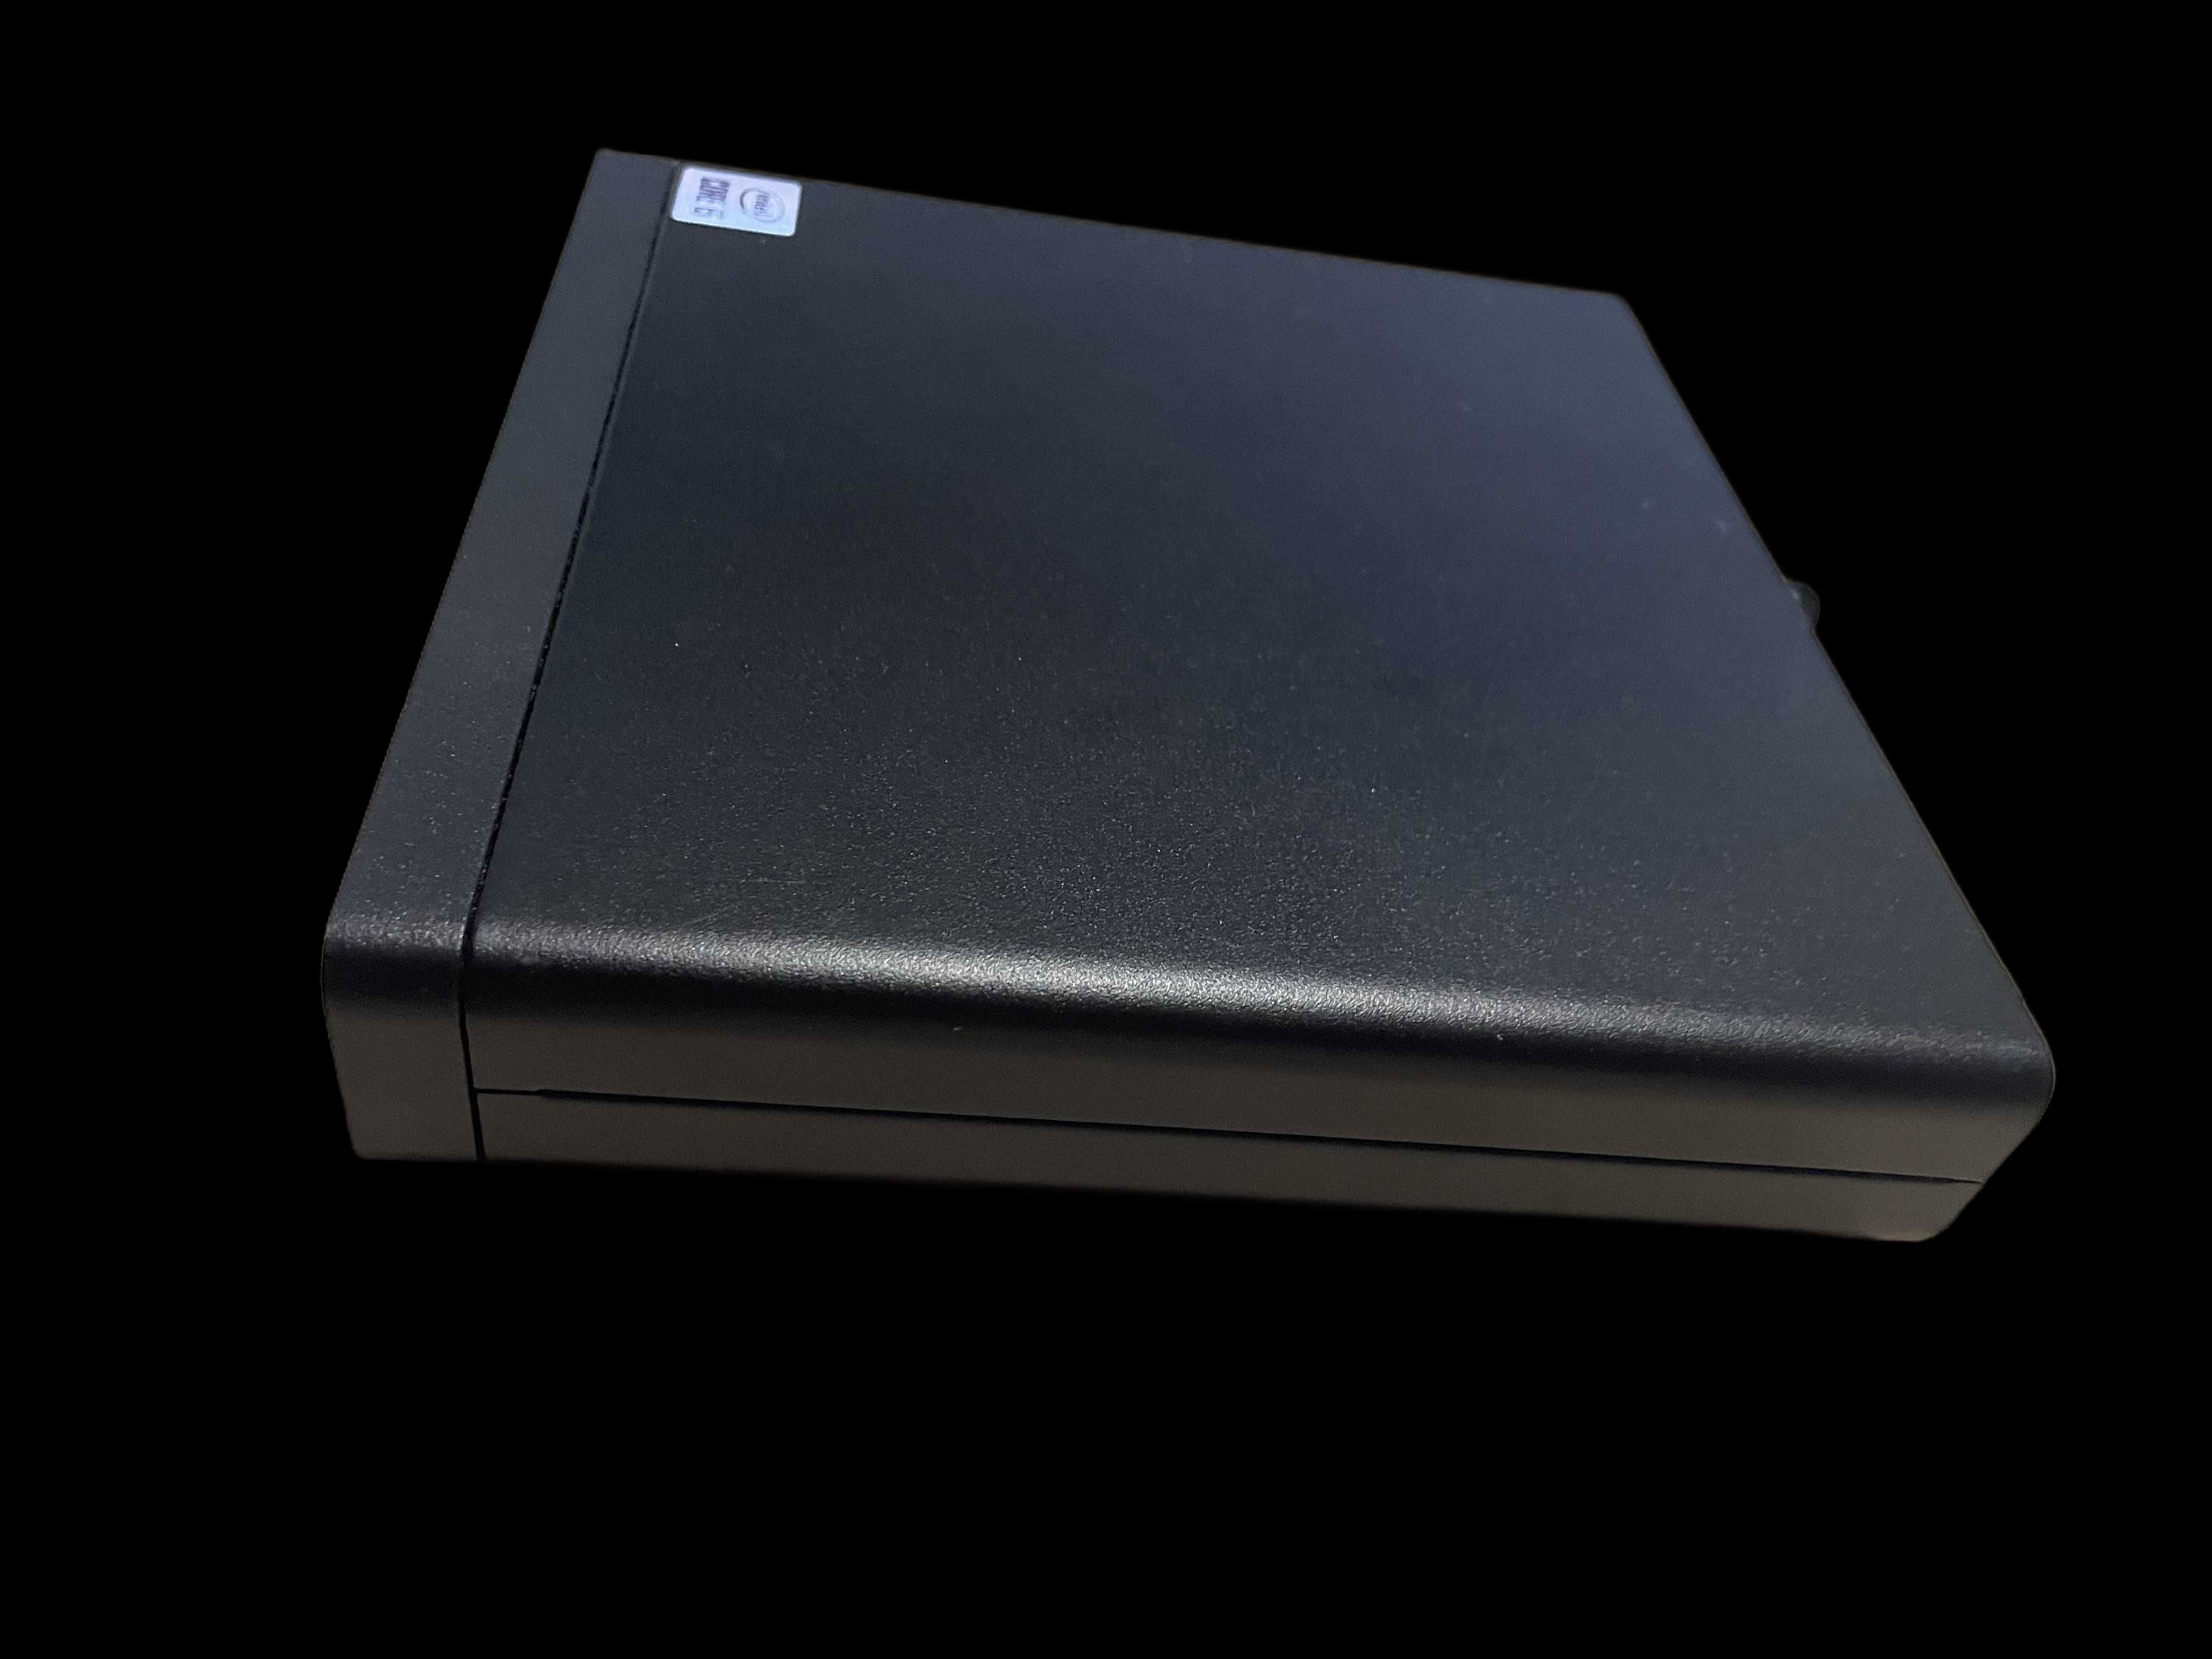 HP ProDesk 400 G6 Mini i5 10500T - 16gb - NVMe